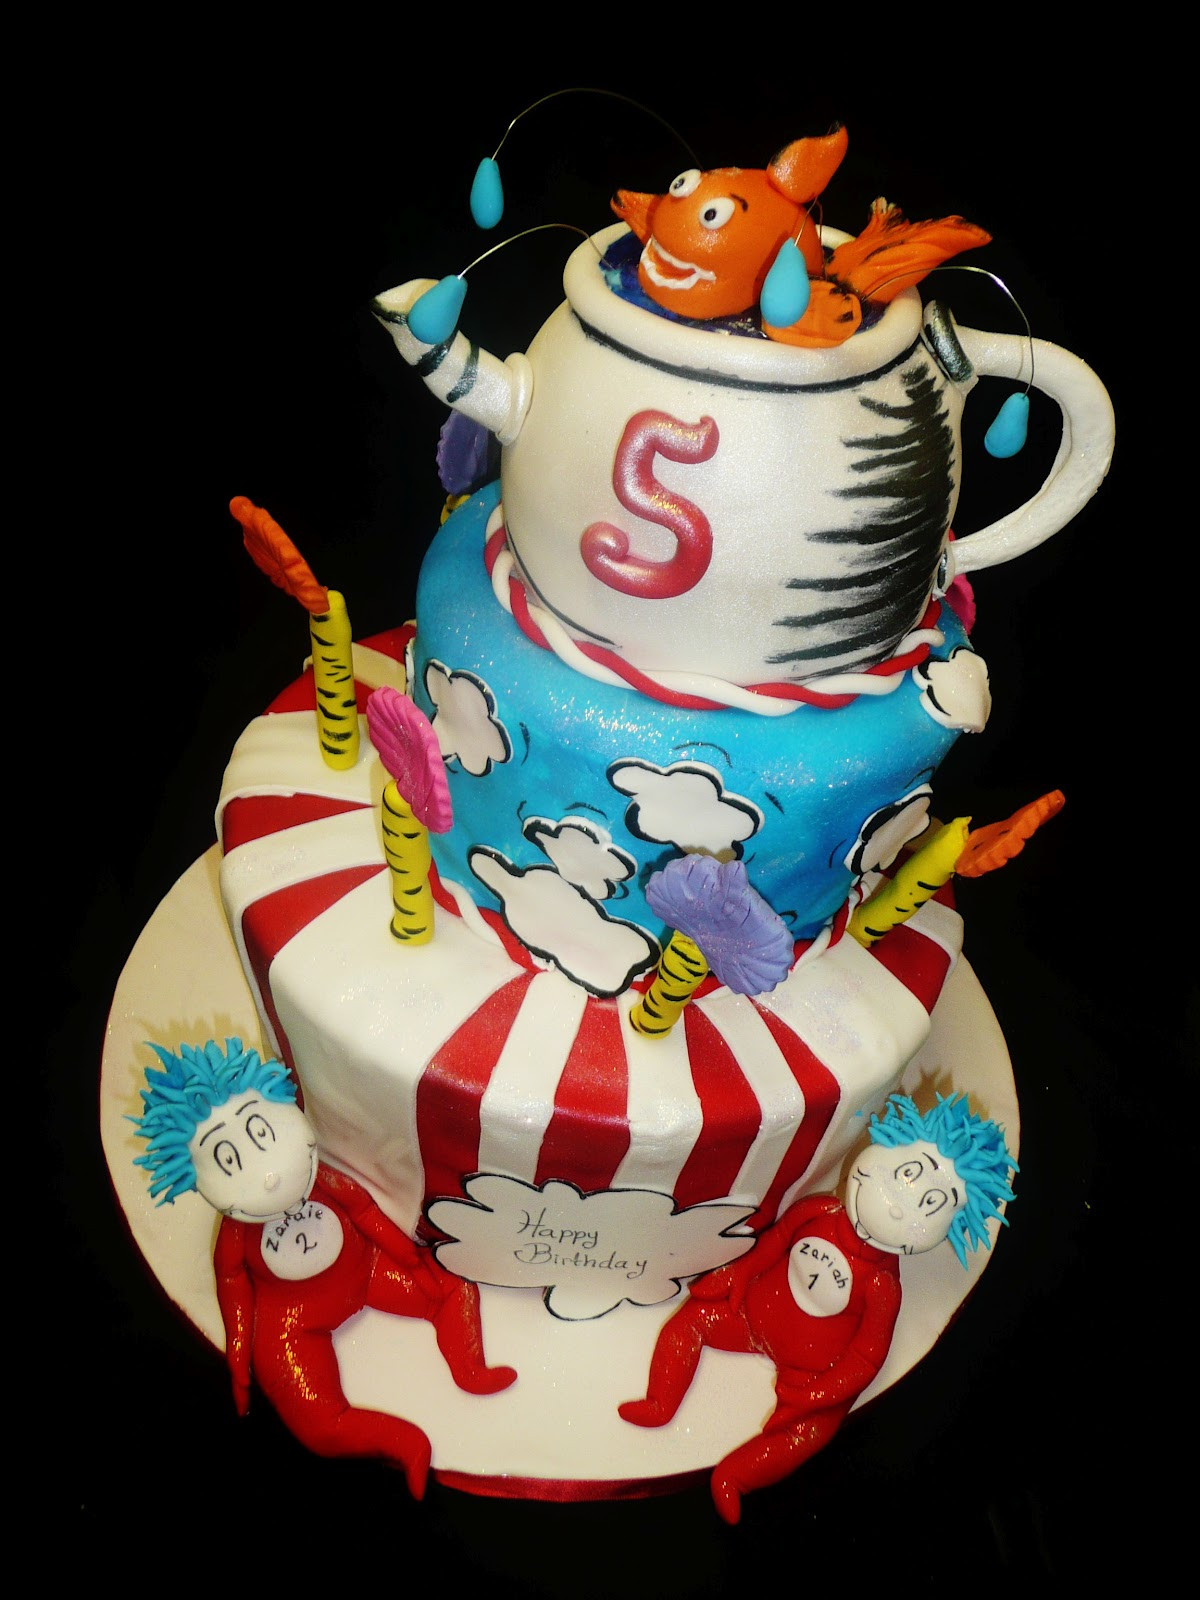 Dr Seuss Birthday Cakes
 Baking with Roxana s Cakes Dr Seuss Themed Birthday Cake